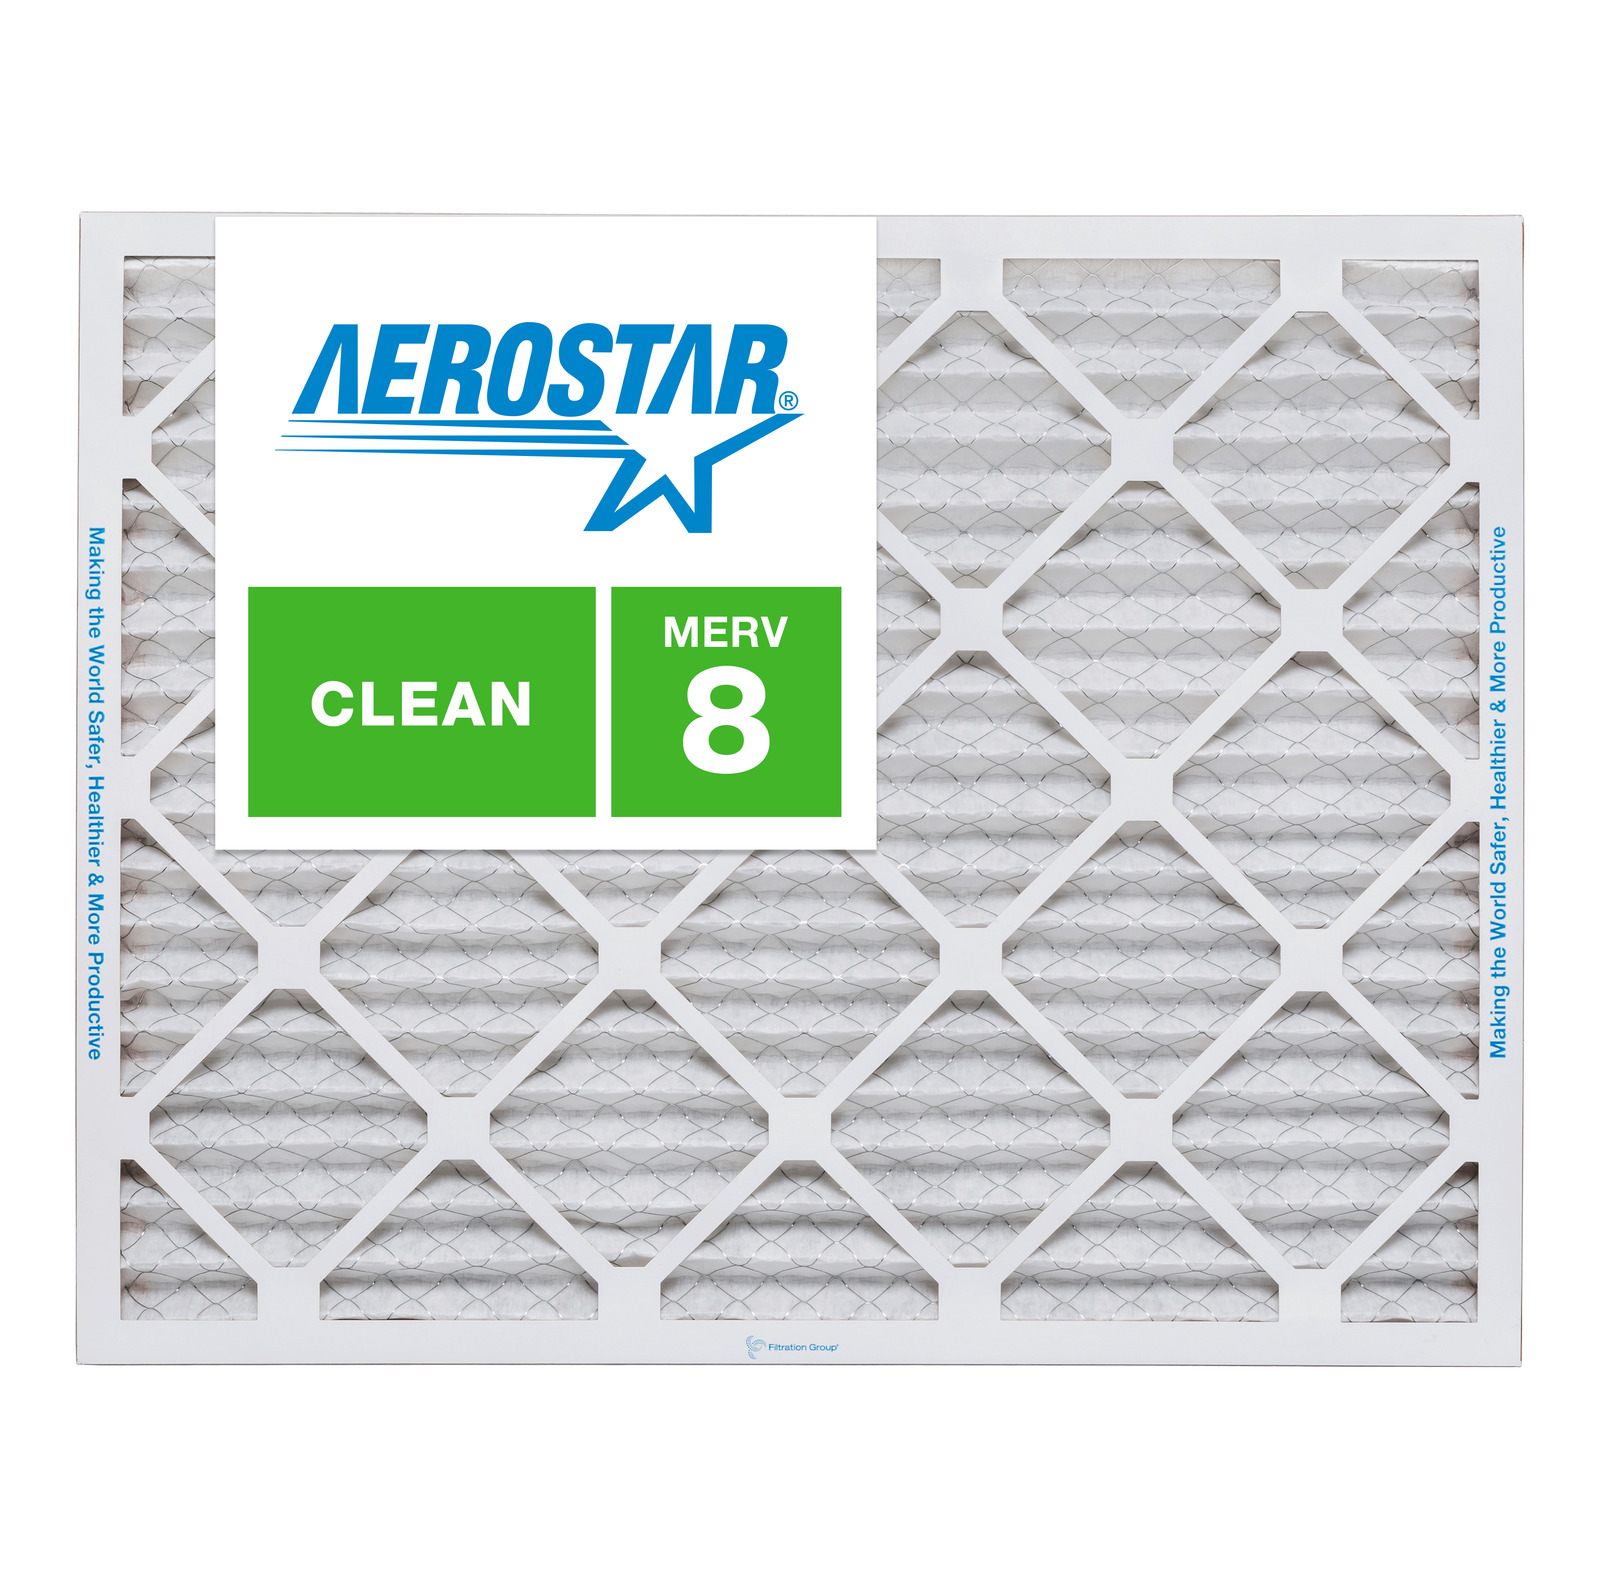 Aerostar 10x20x1 MERV 8 Furnace Air Filter, 6 Pack